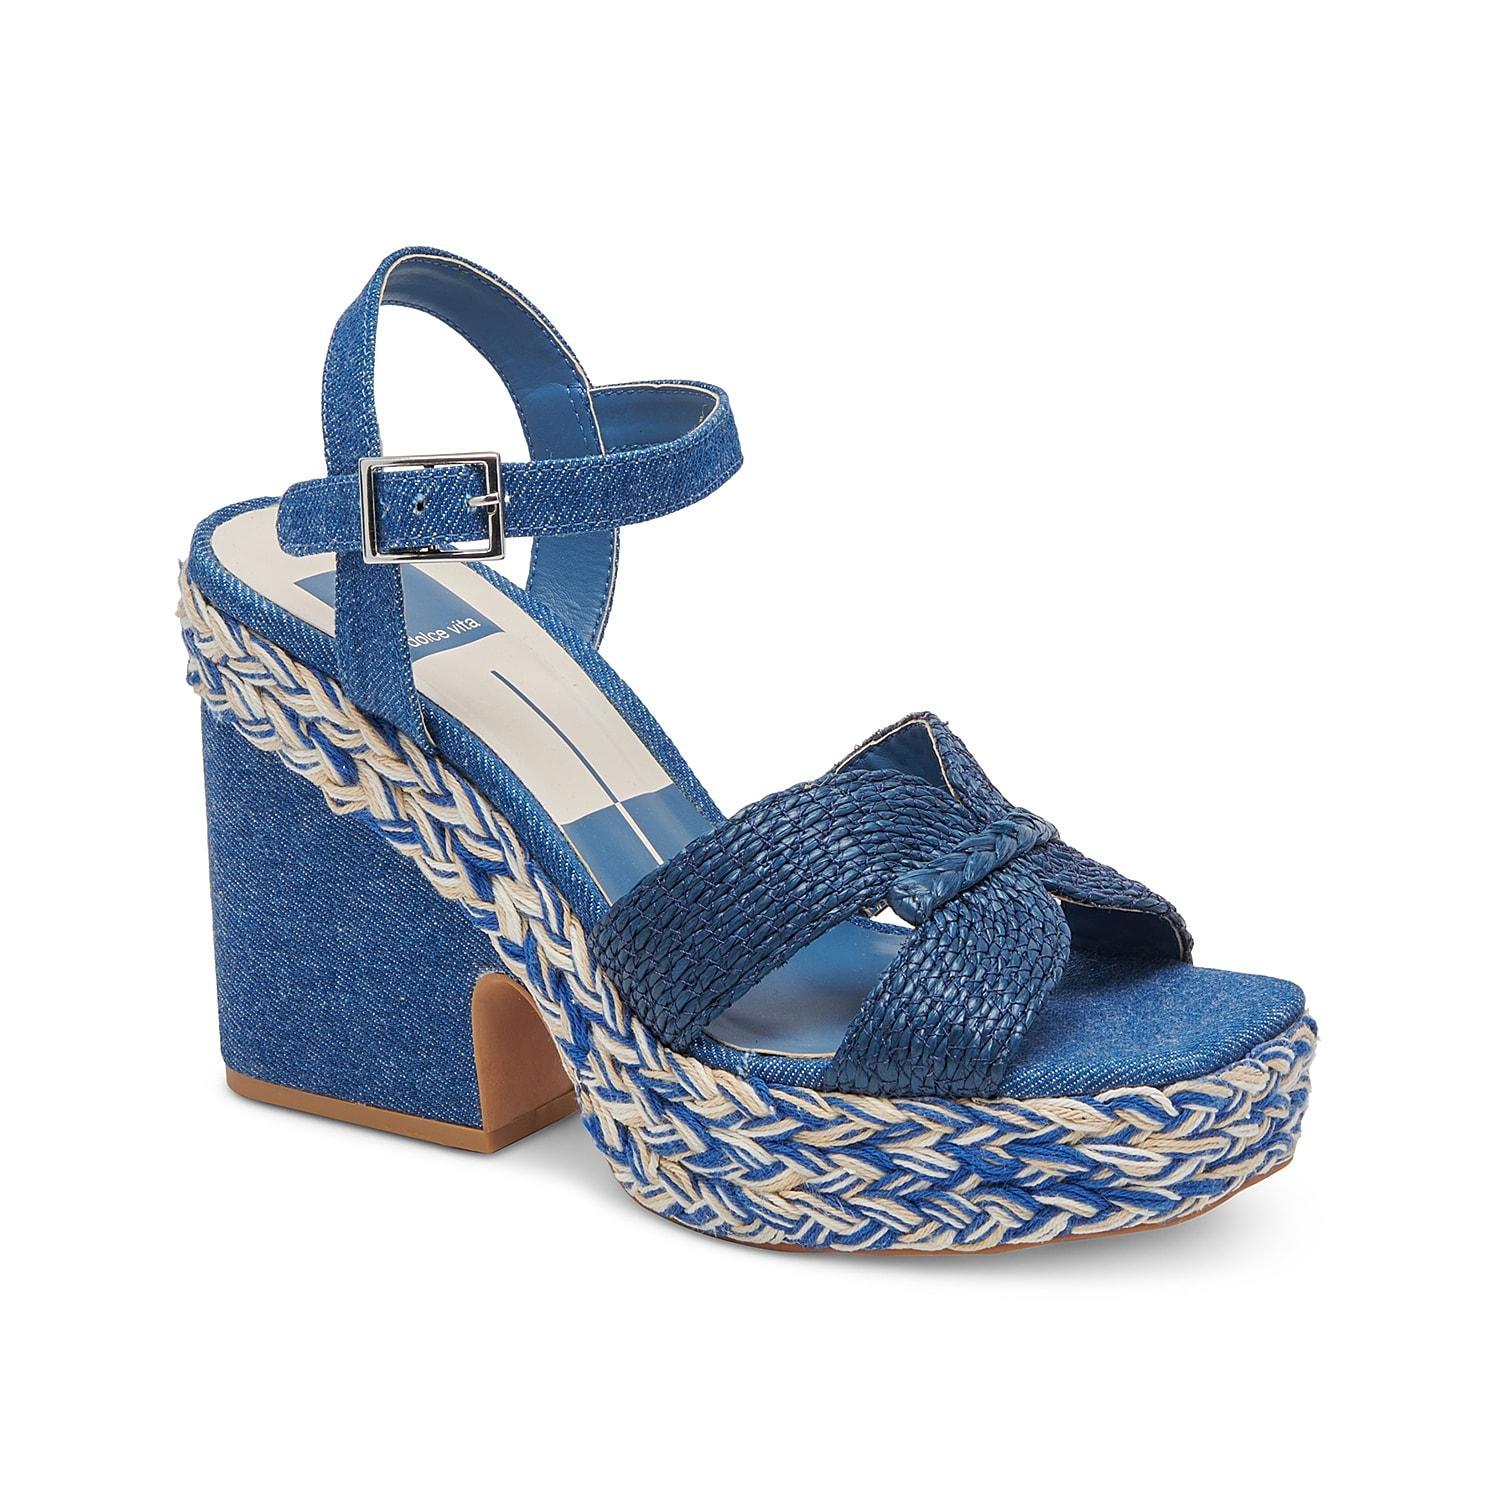 Dolce Vita Cale Raffia Ankle Strap Platform Sandals Product Image